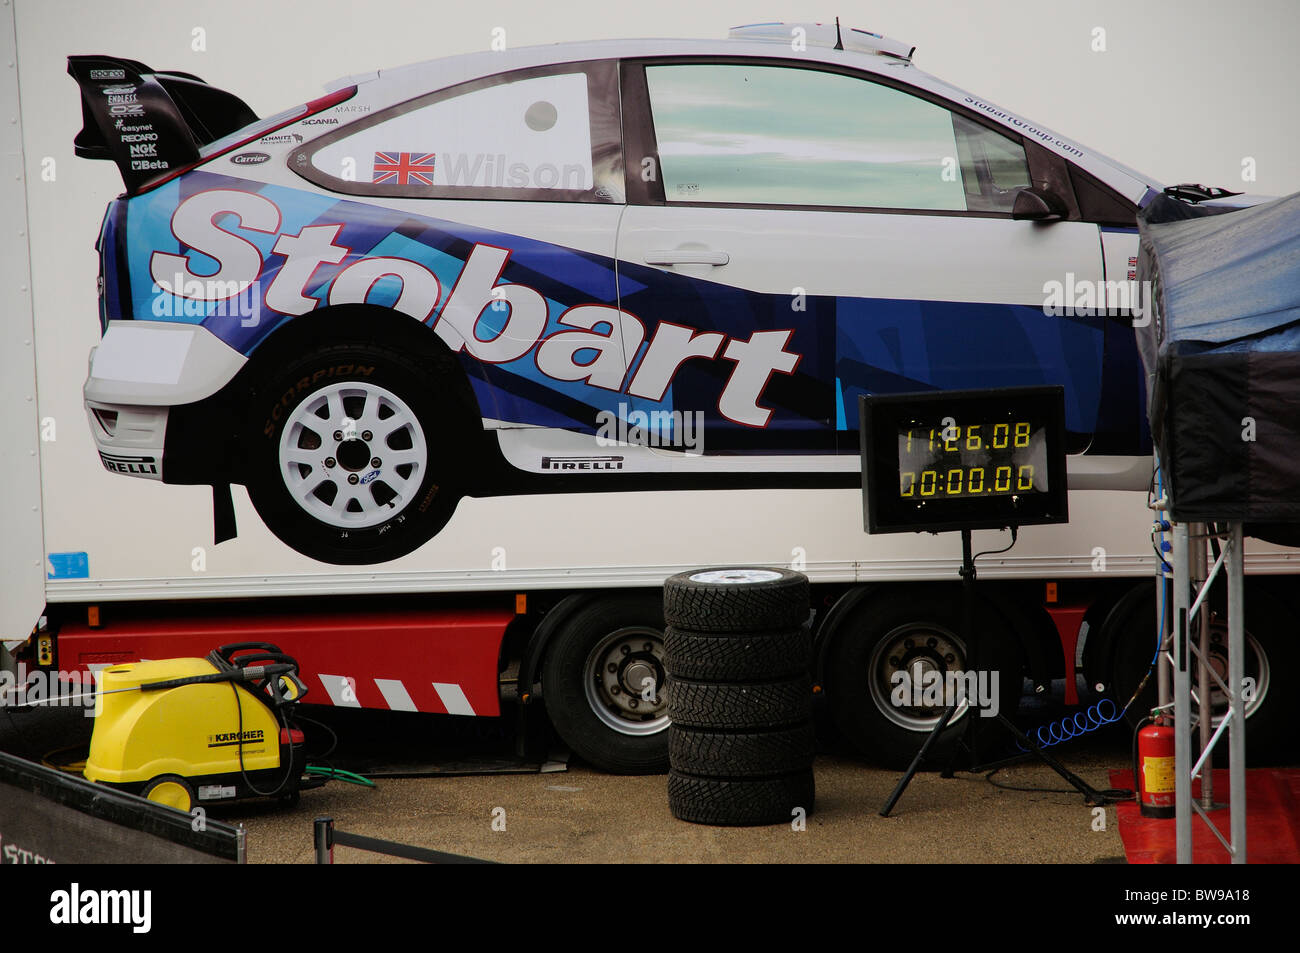 El piloto de Stobart motor sport truck Rally Team el transporte Foto de stock